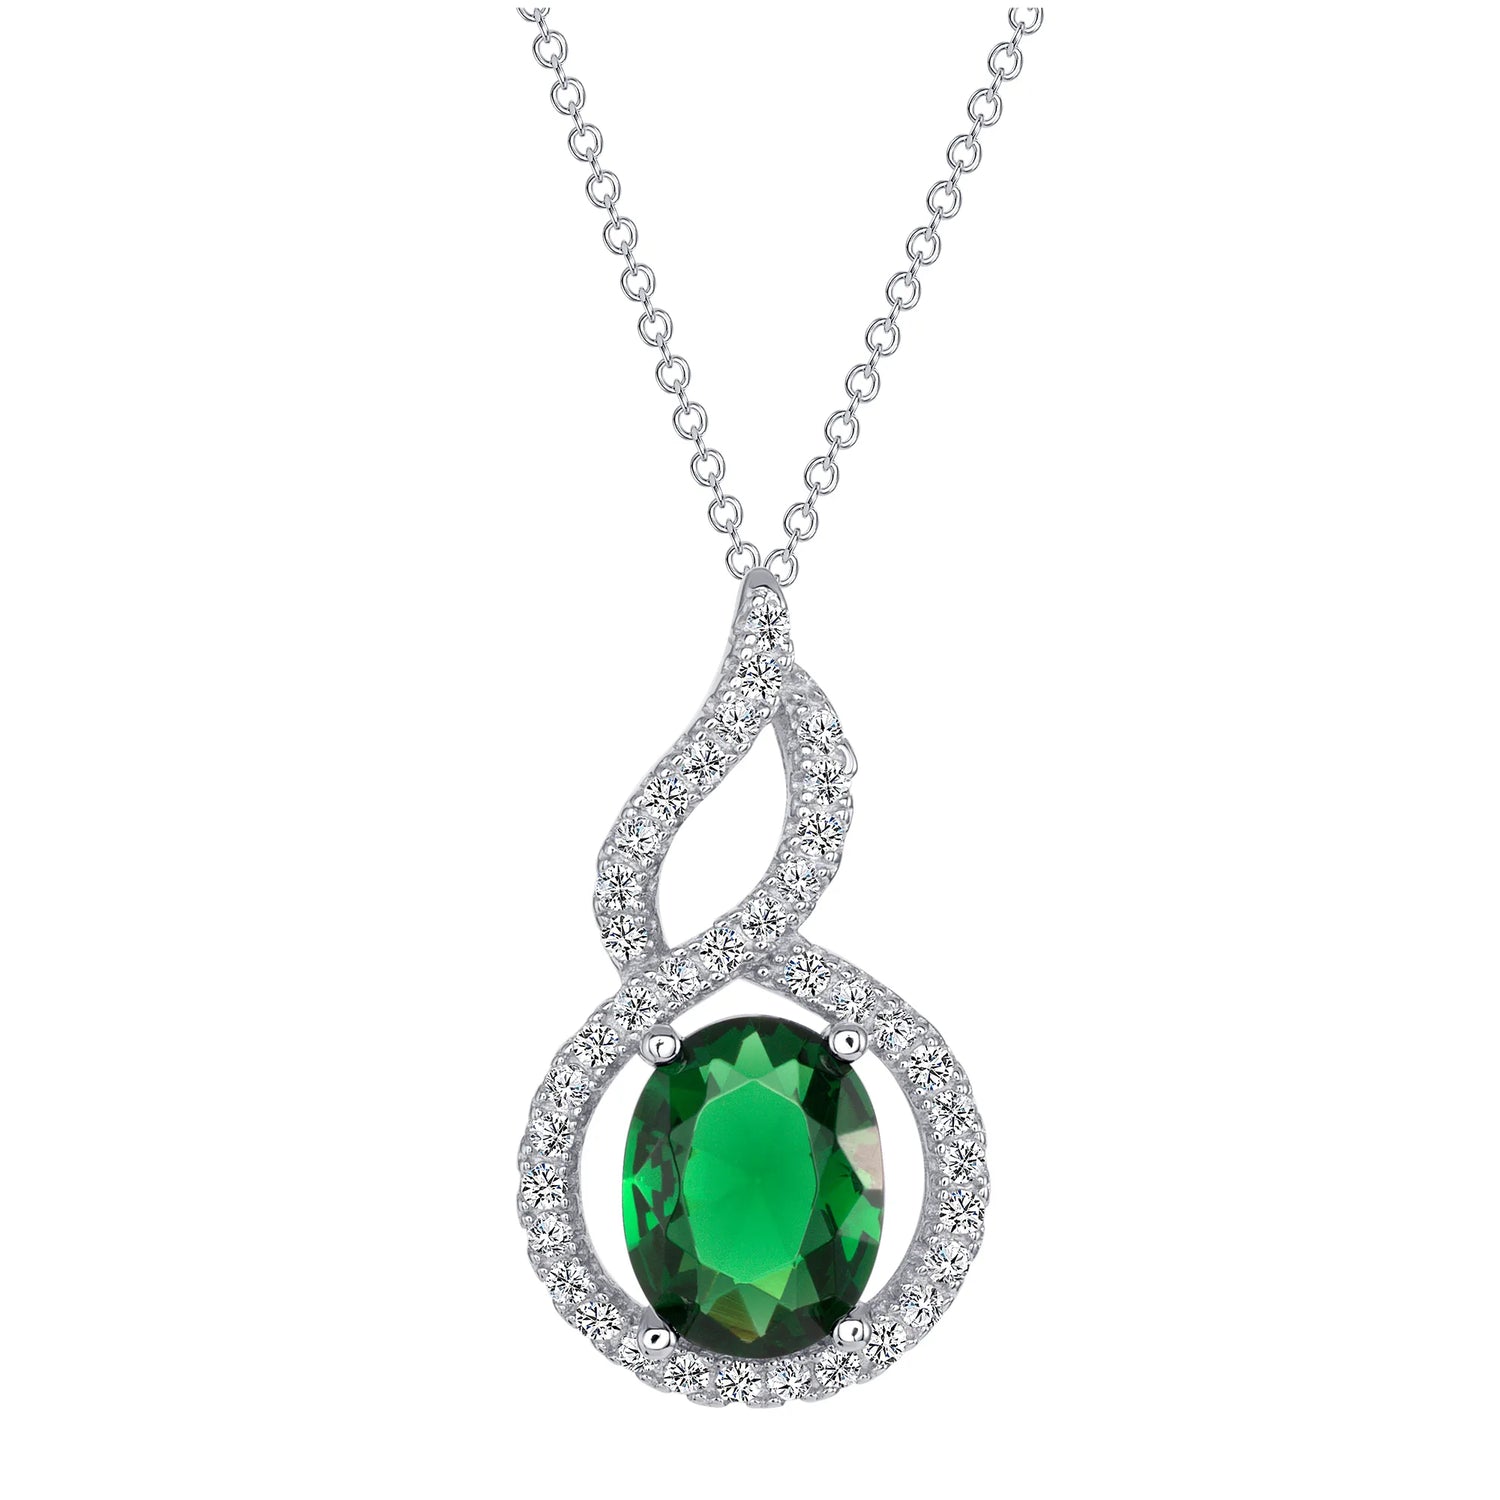 925 Sterling Silver Oval Cut Green CZ with Twisted CZ Halo Teardrop Pendant &amp; Earrings Jewelry Set